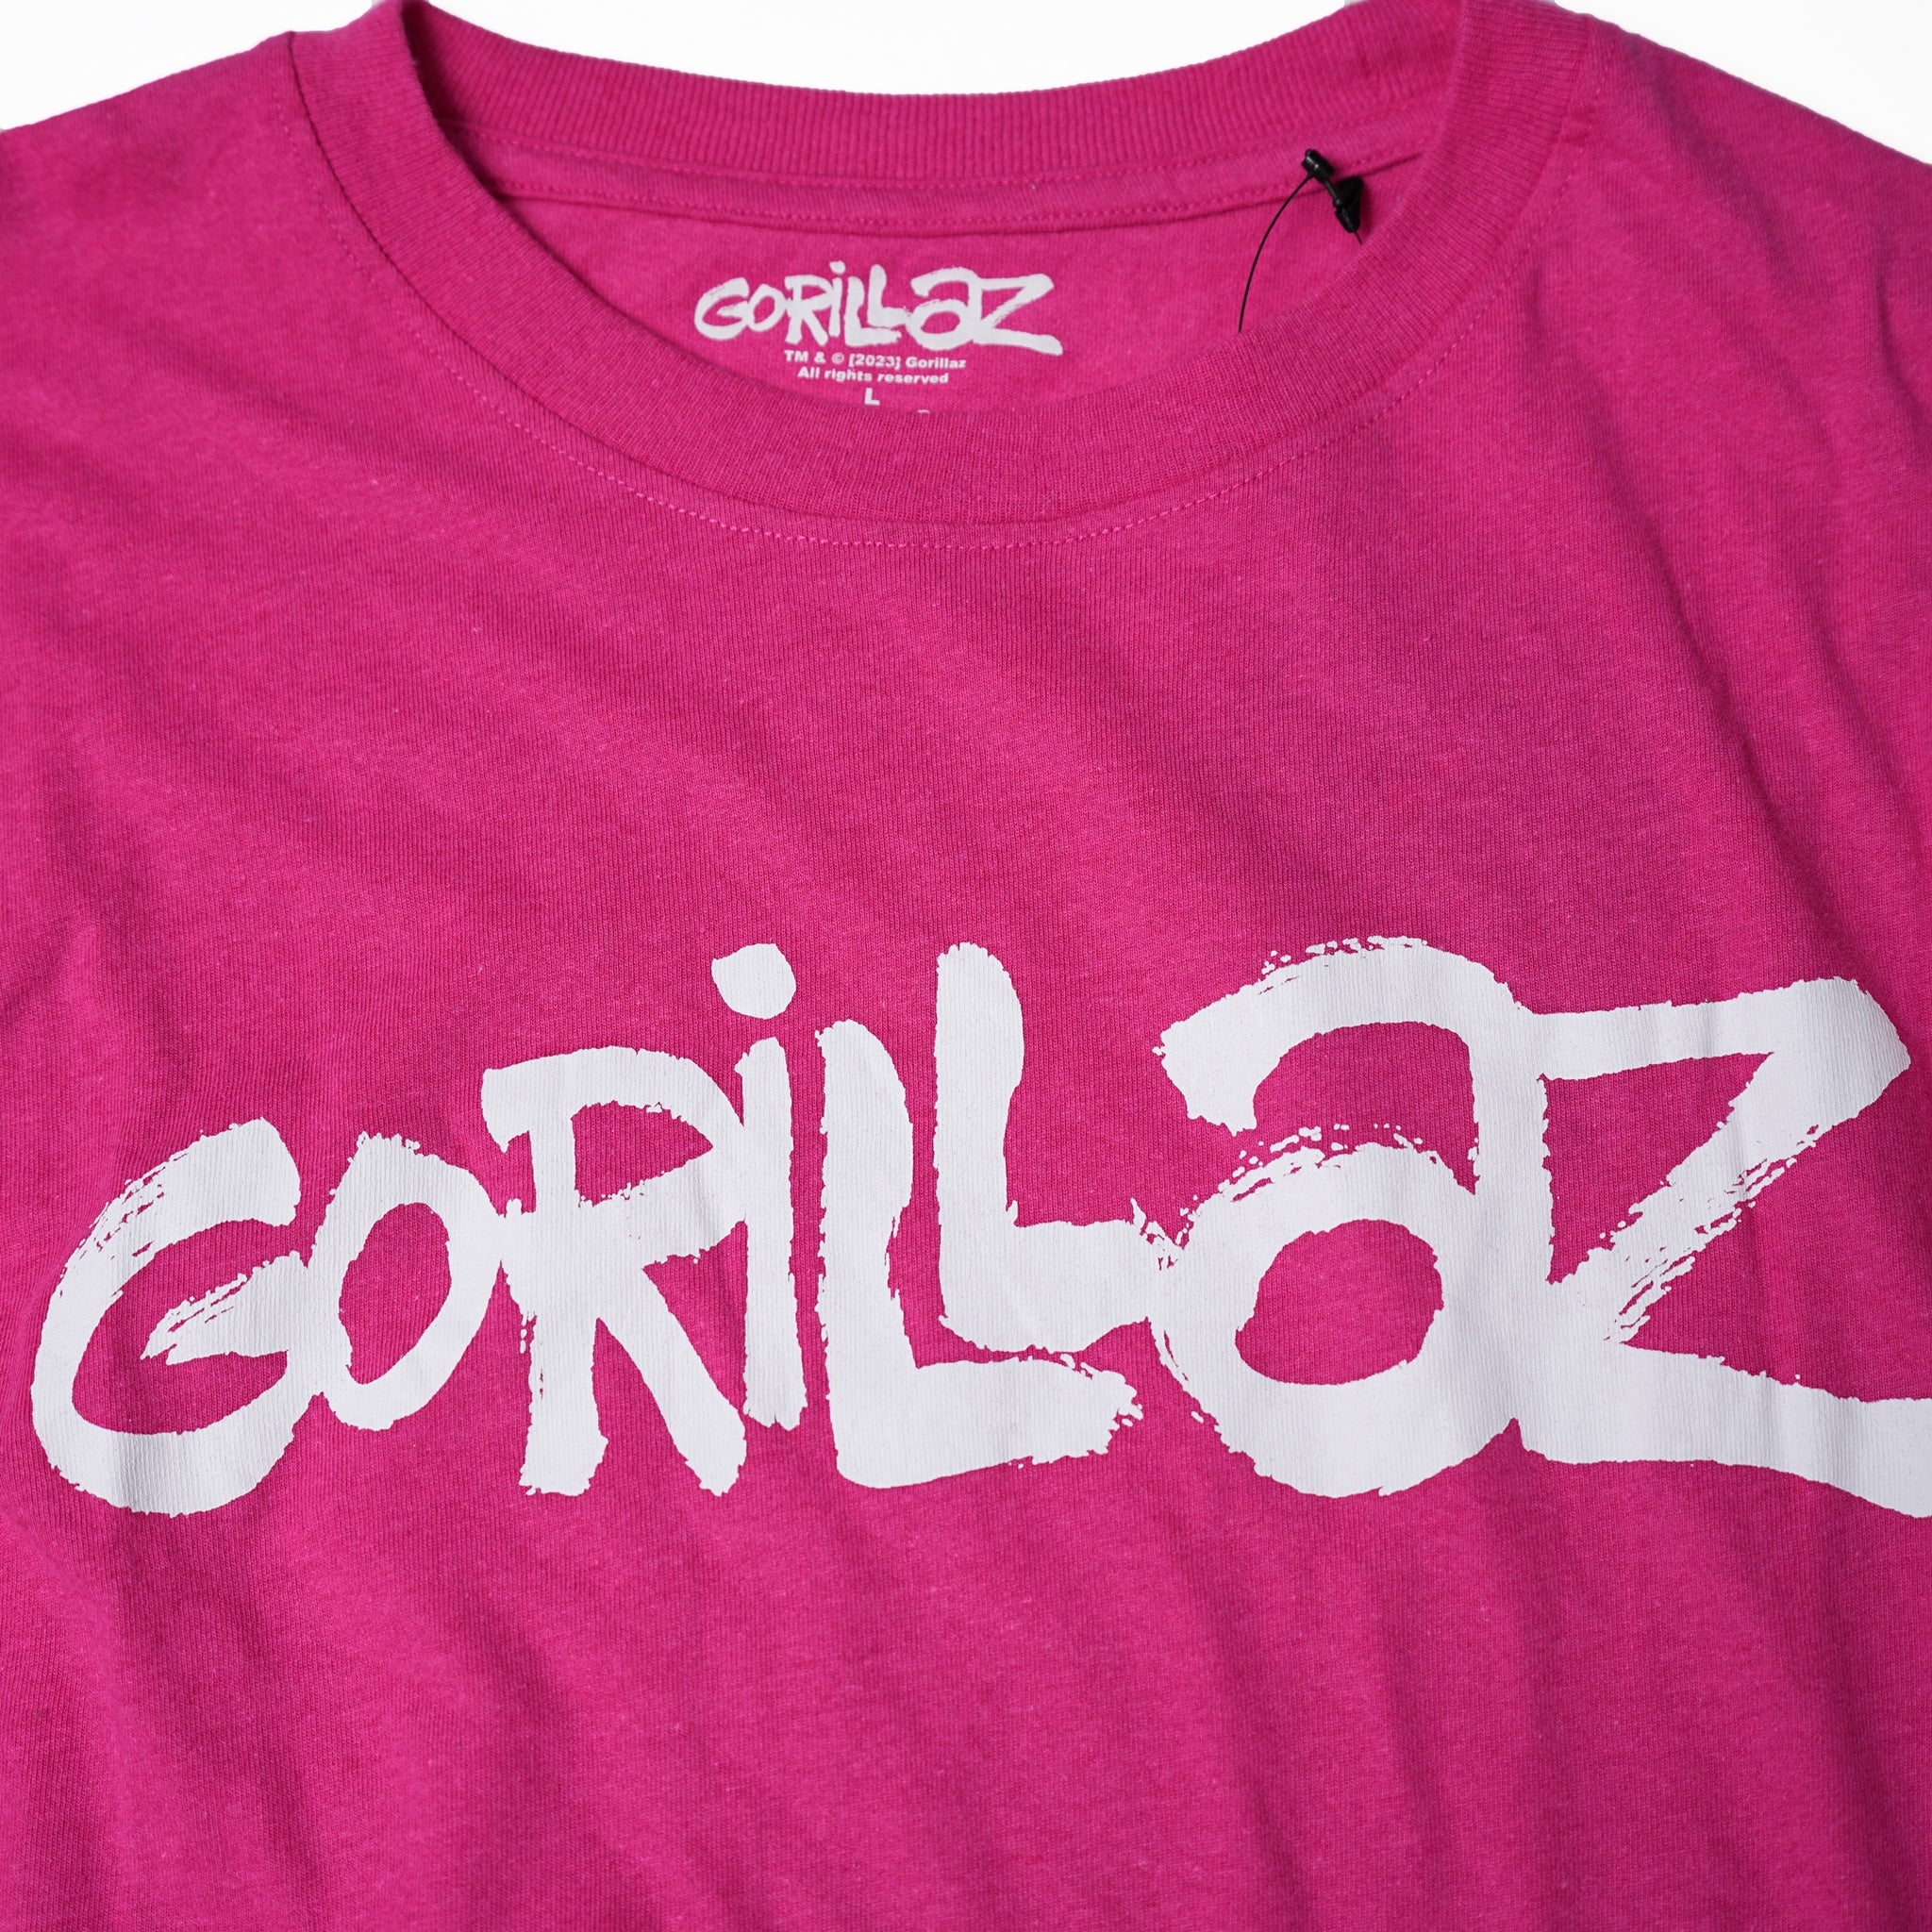 Name:Gorillaz_Repeat Pazuzu Spiral【ROCK OFF】【ネコポス選択可能】